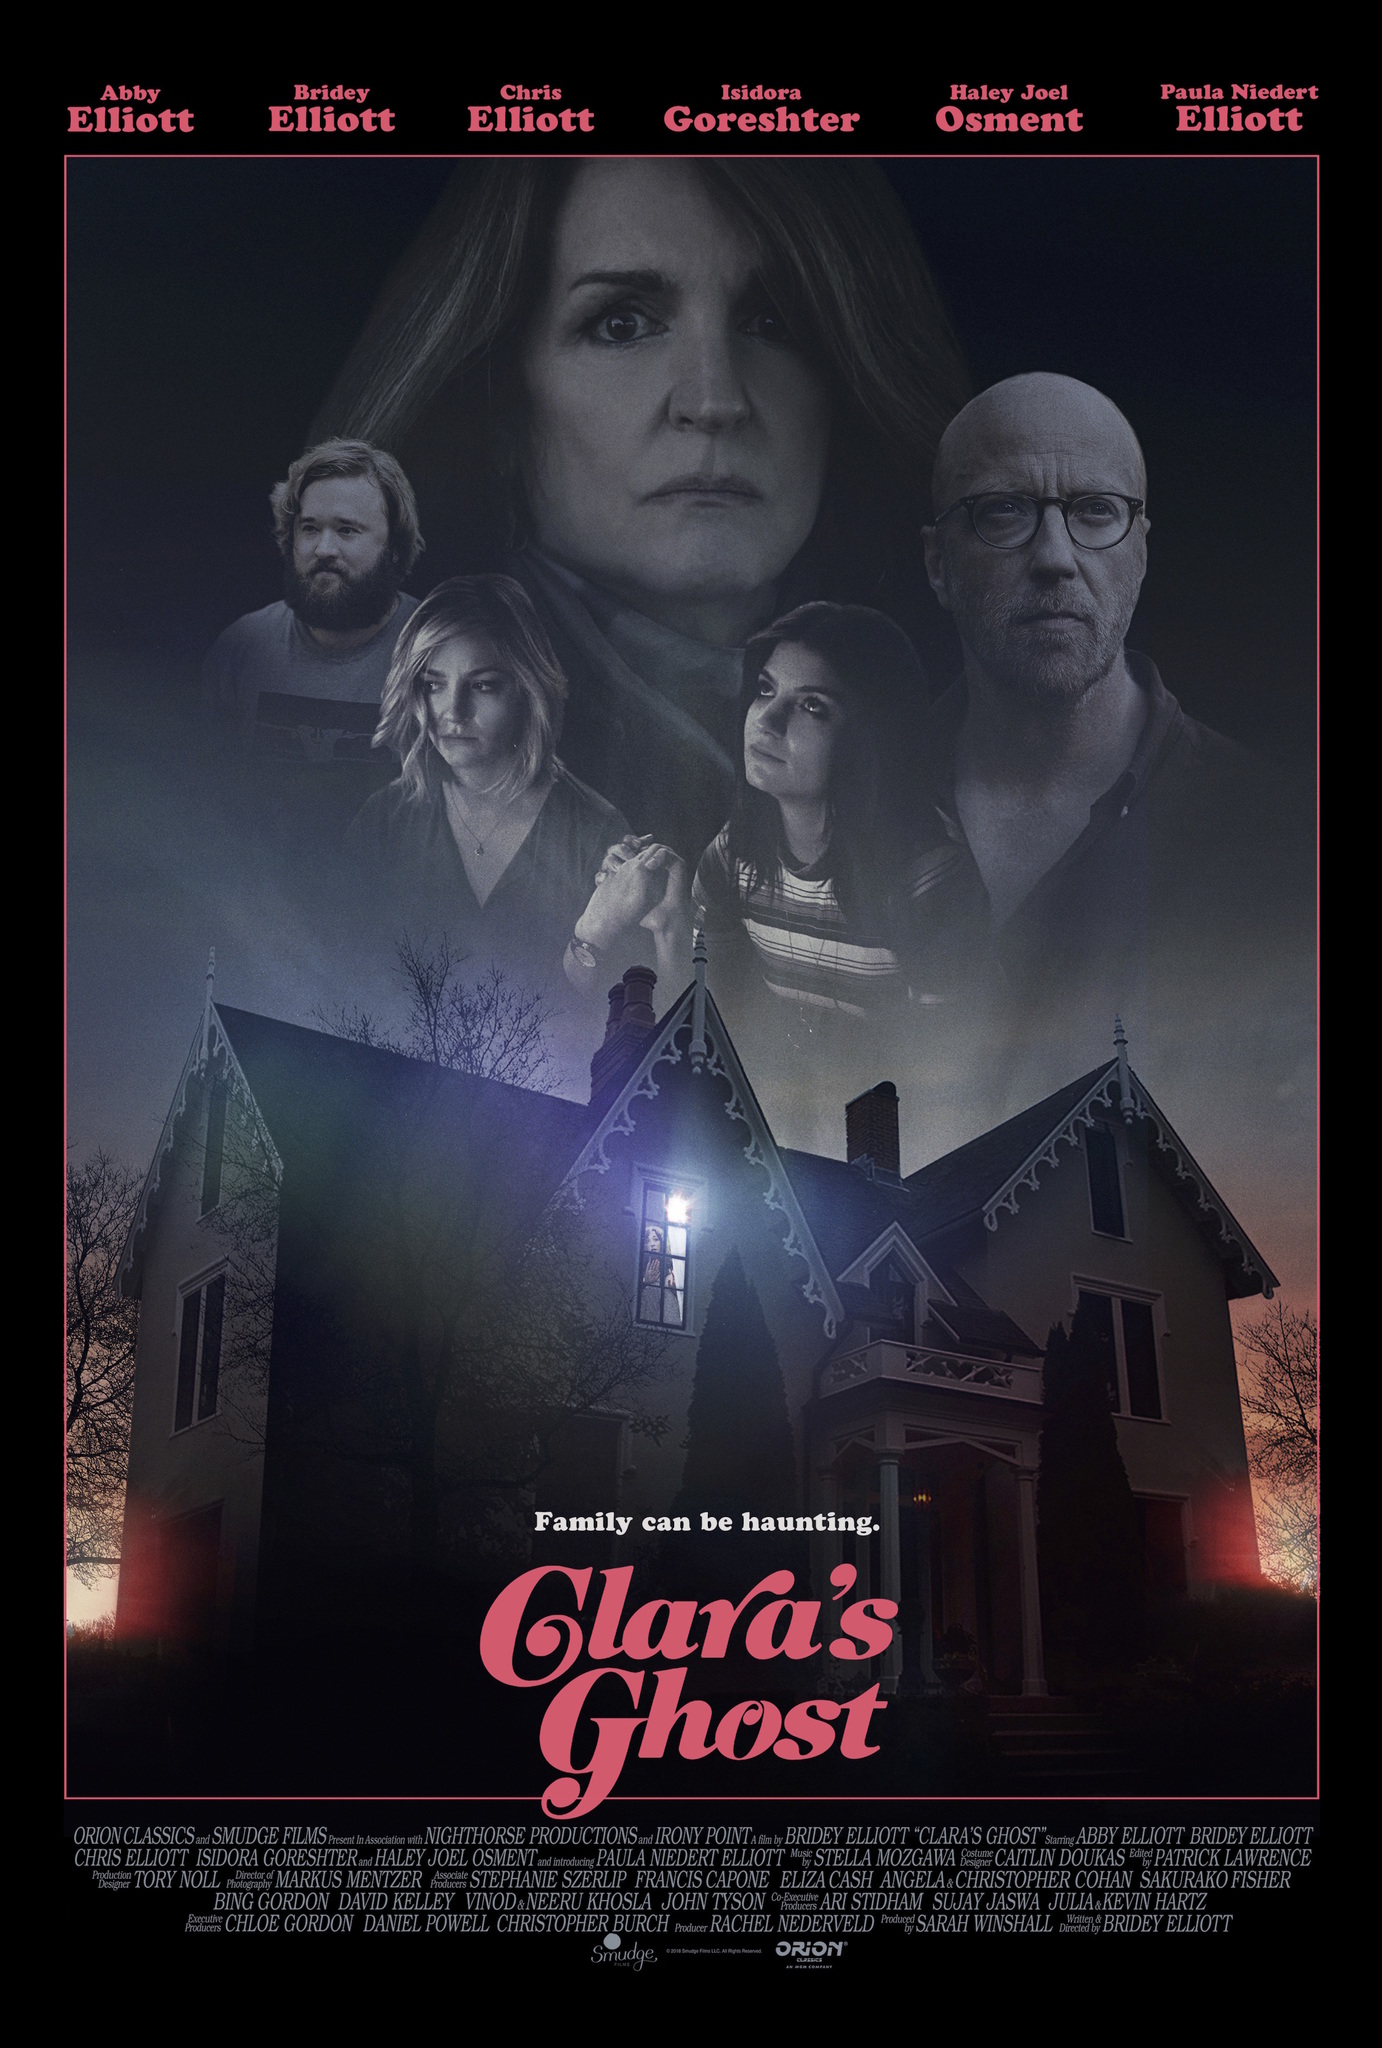 Nonton film Claras Ghost layarkaca21 indoxx1 ganool online streaming terbaru